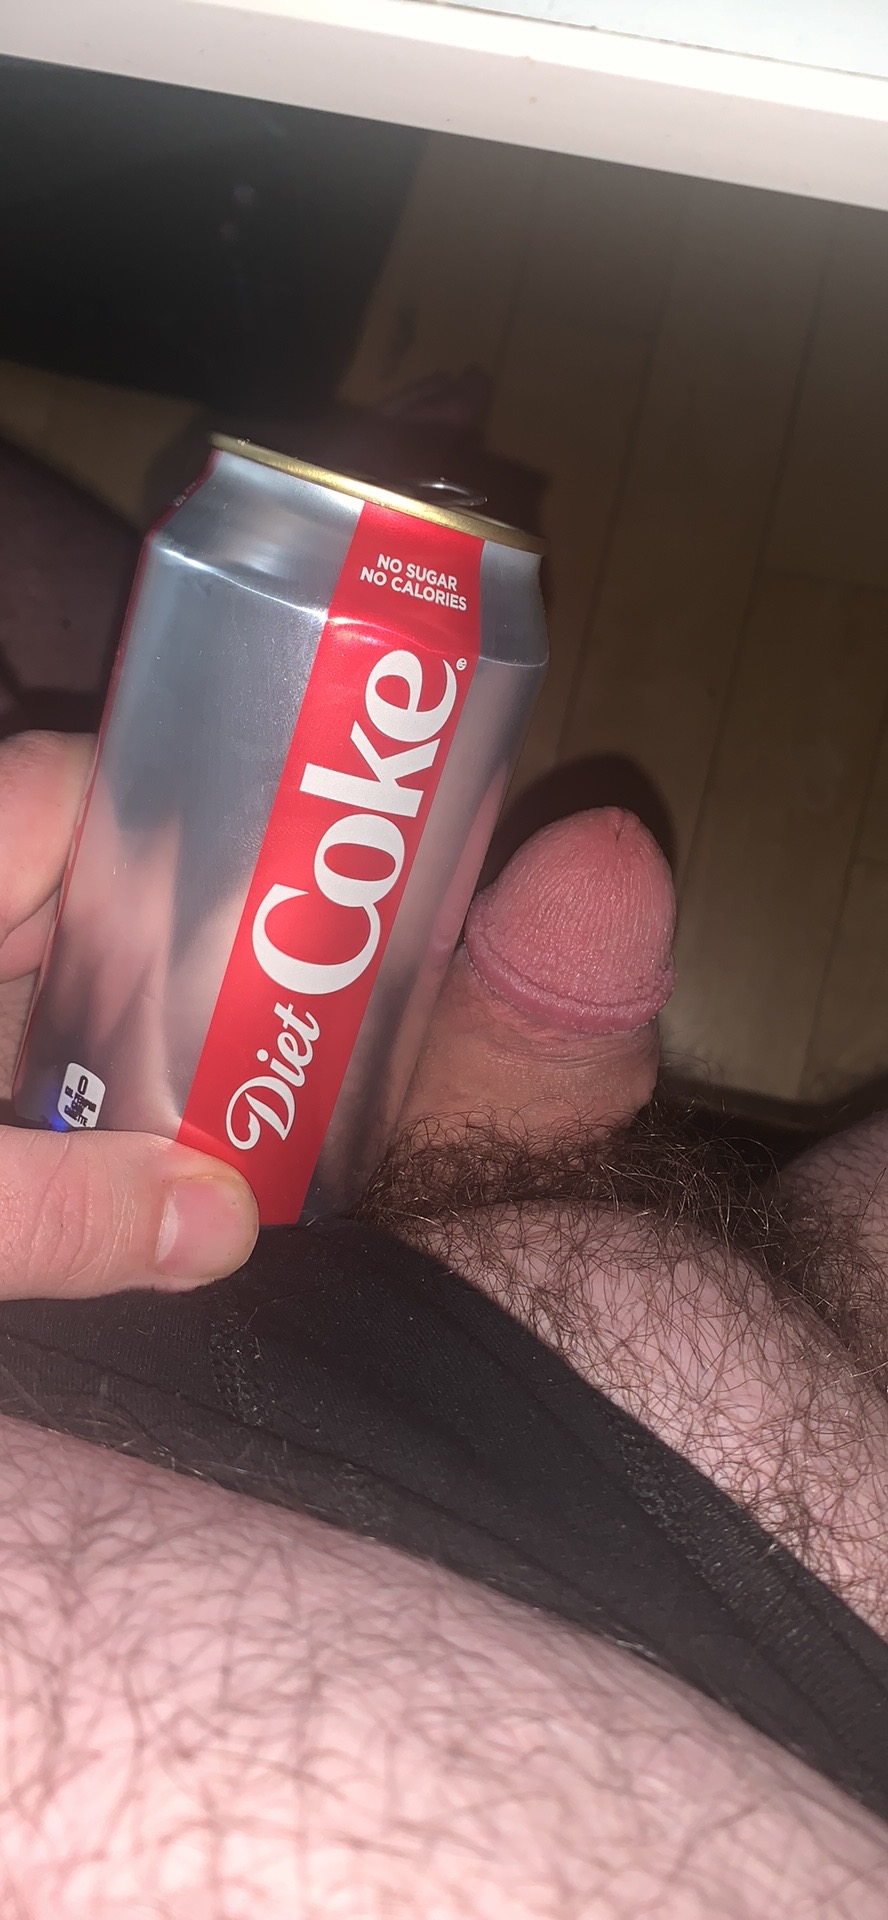 Coke Bottle Cock, more like Chopstick Dick pic